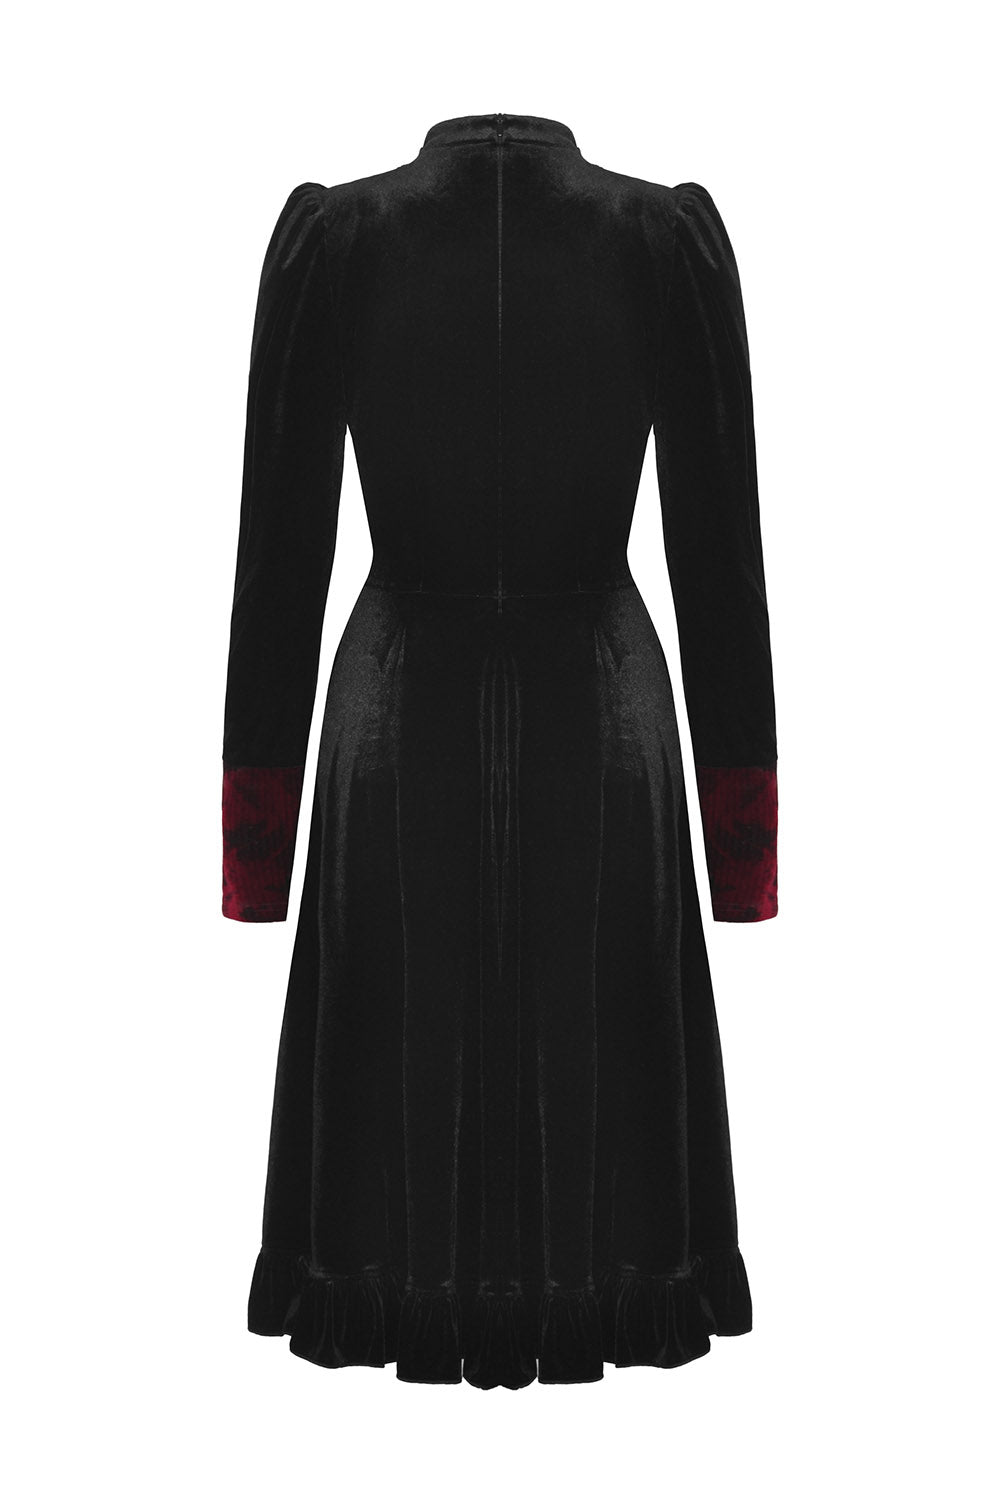 Edwardian goth dress